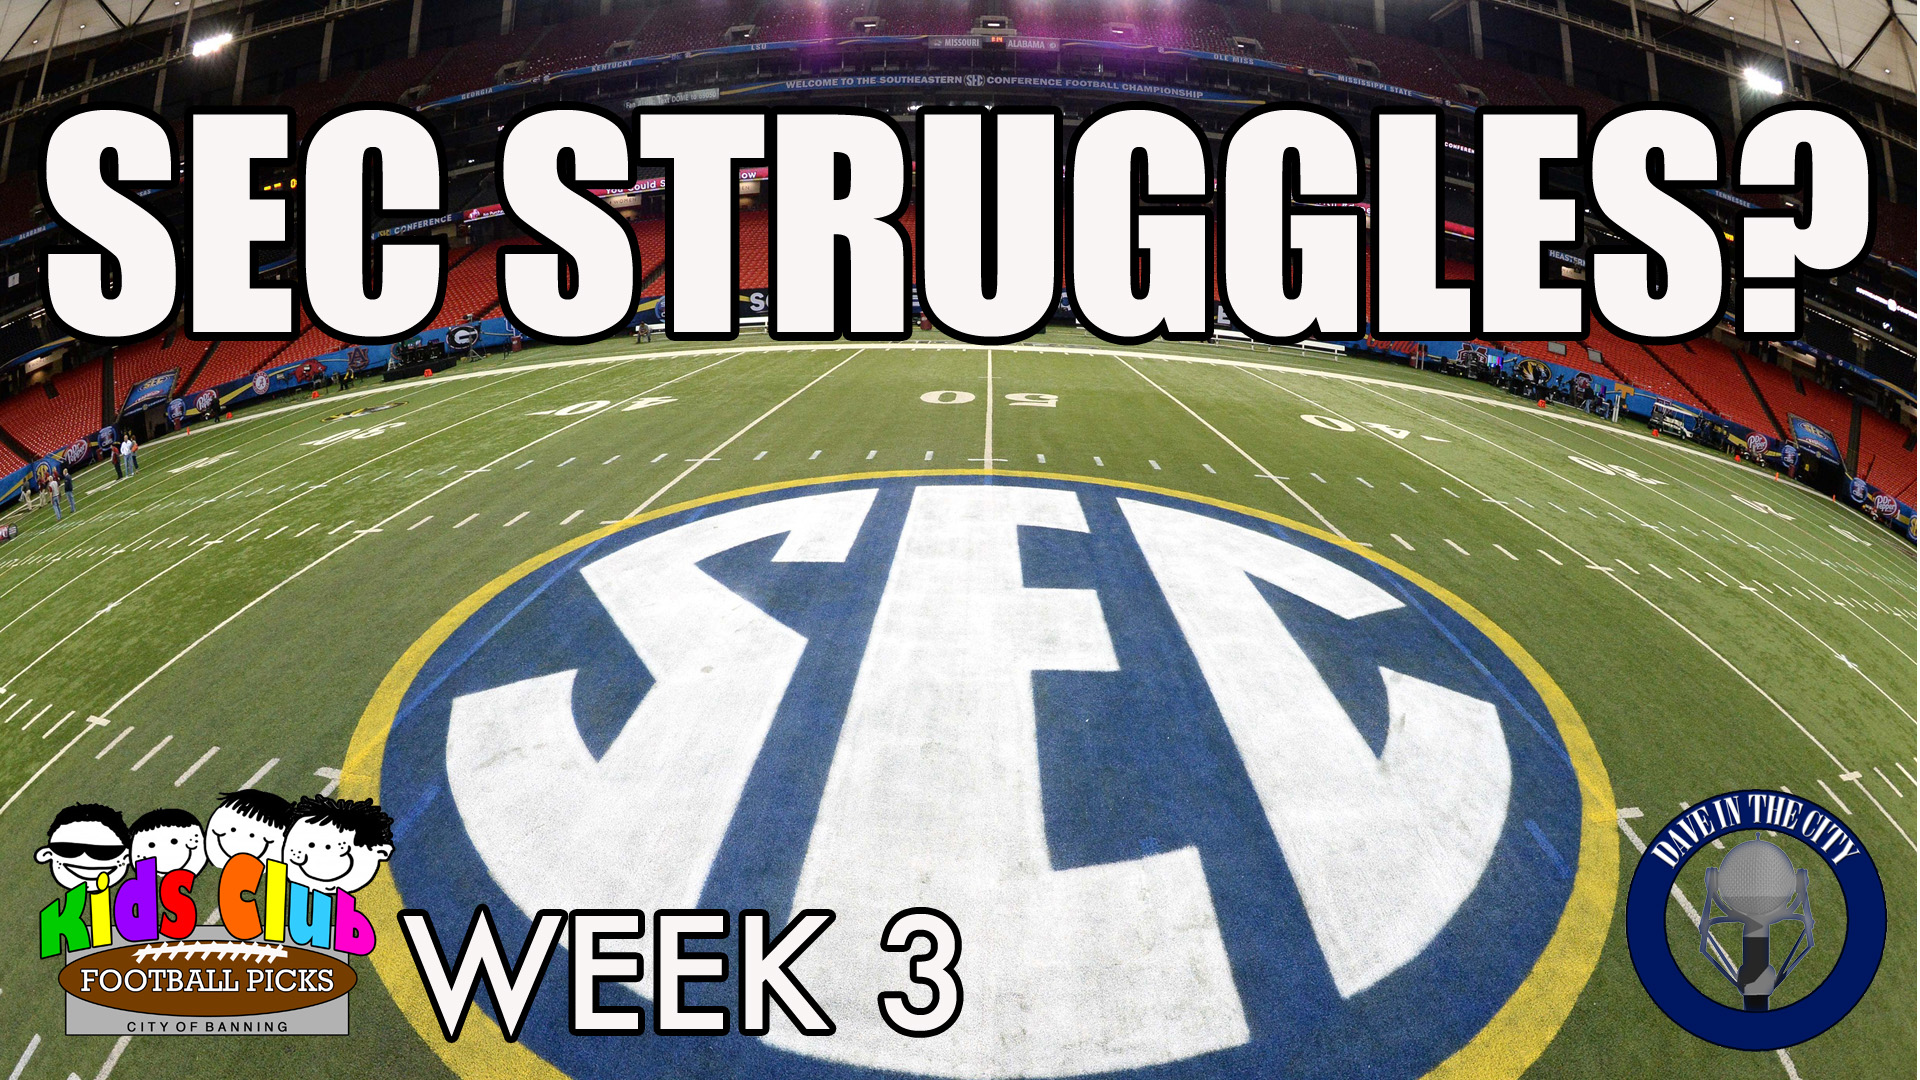 Podcast: SEC Football struggles, Serena Williams Upset, Kids Club Week 3 Picks (09-16-15)